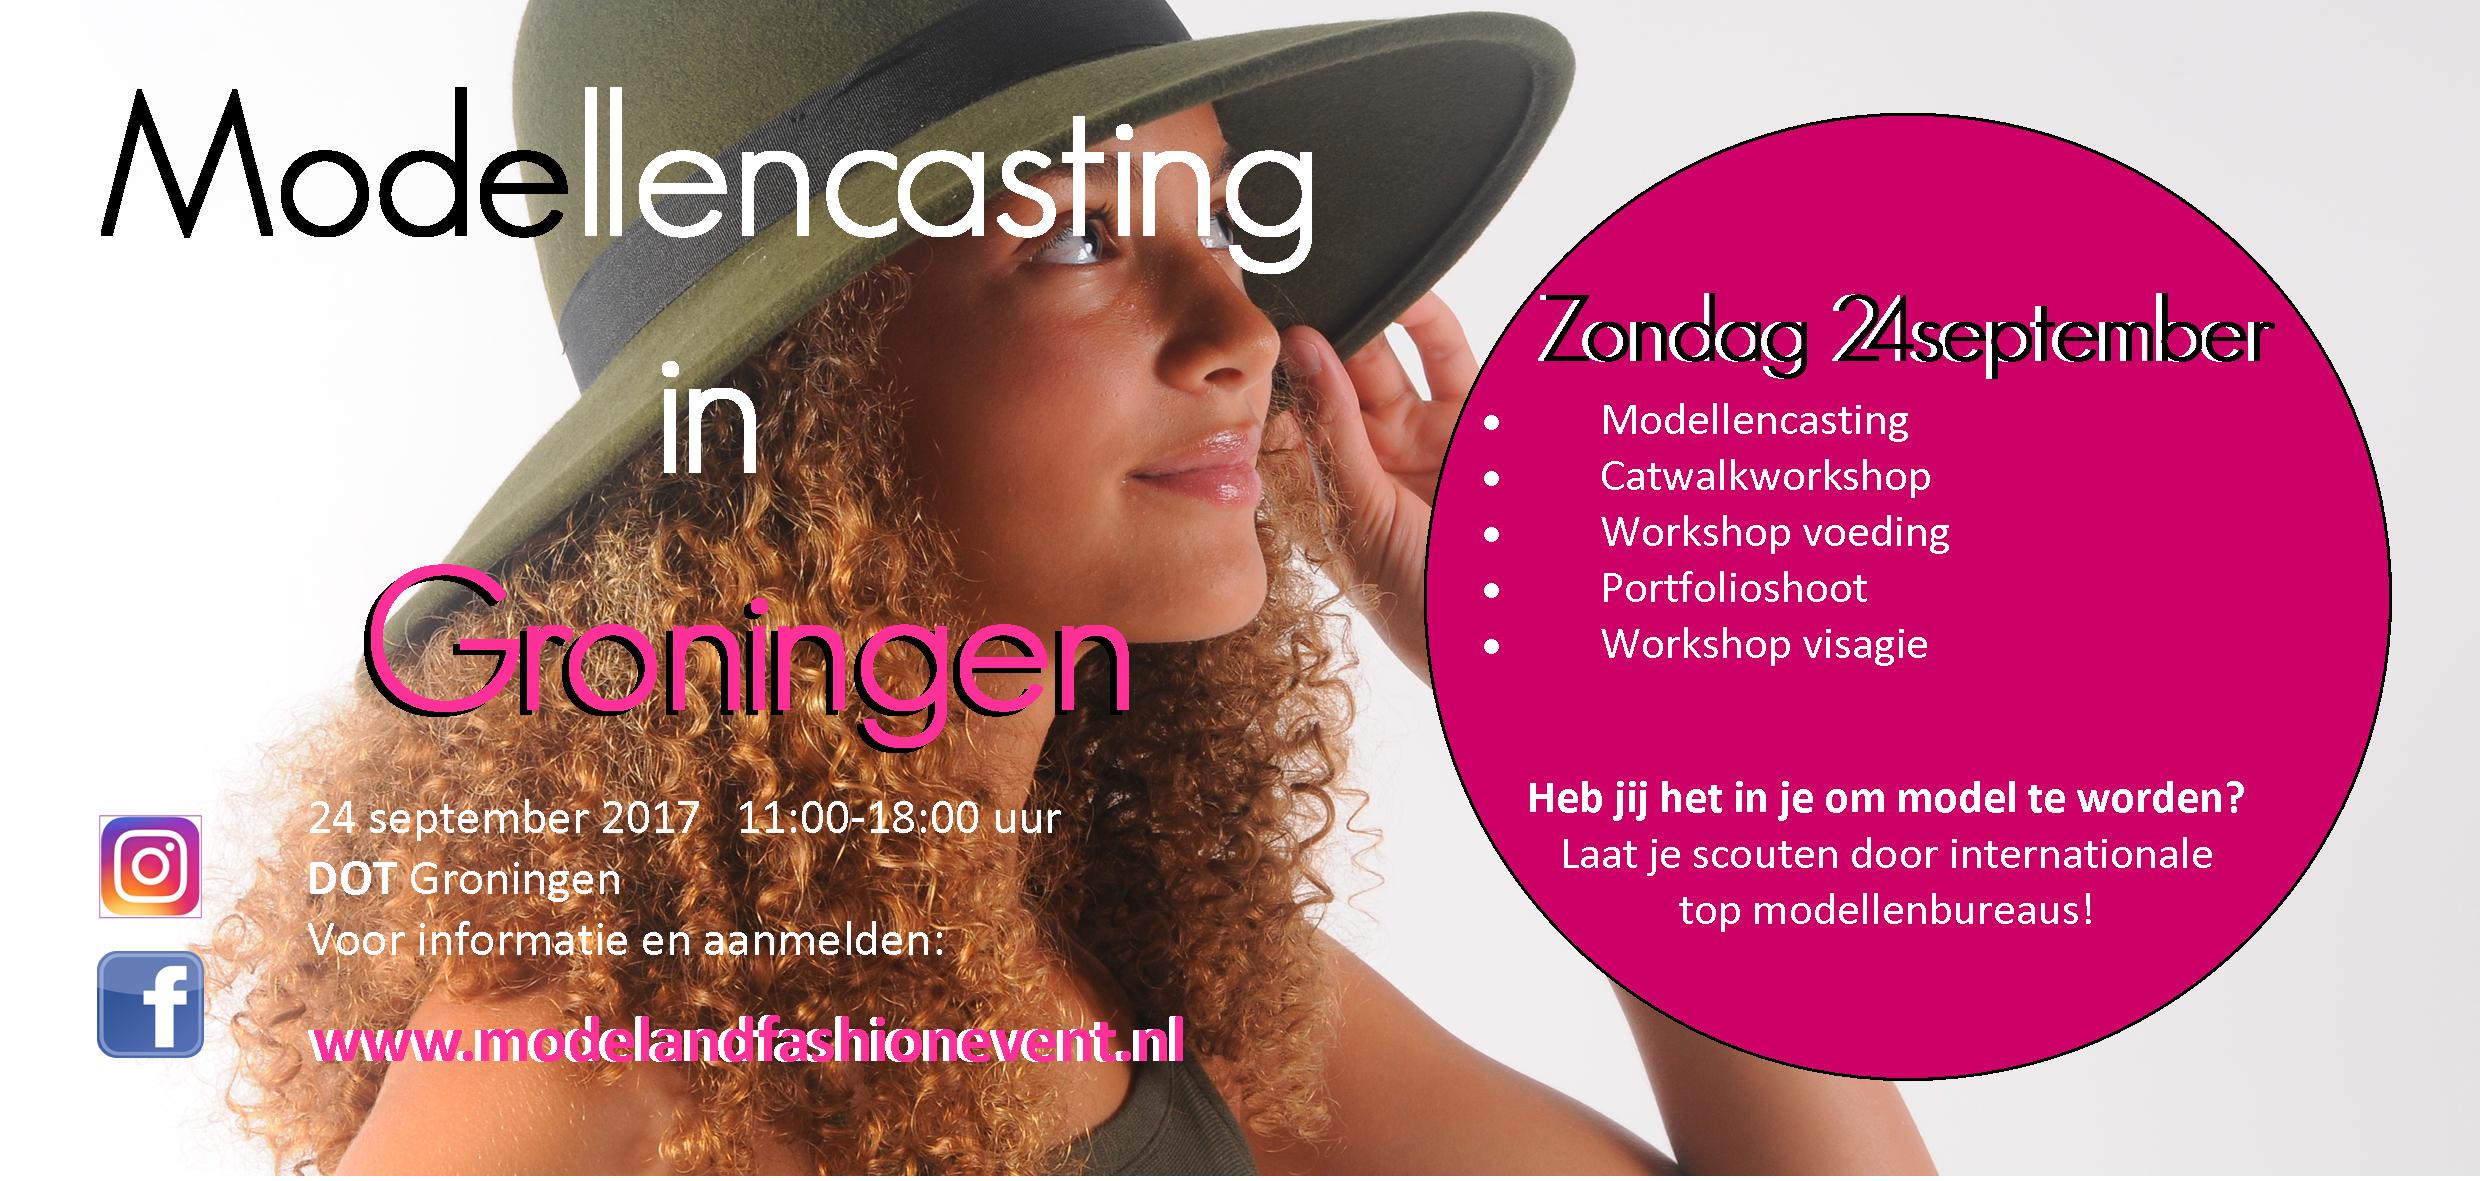 Model & Fashion Event Groningen